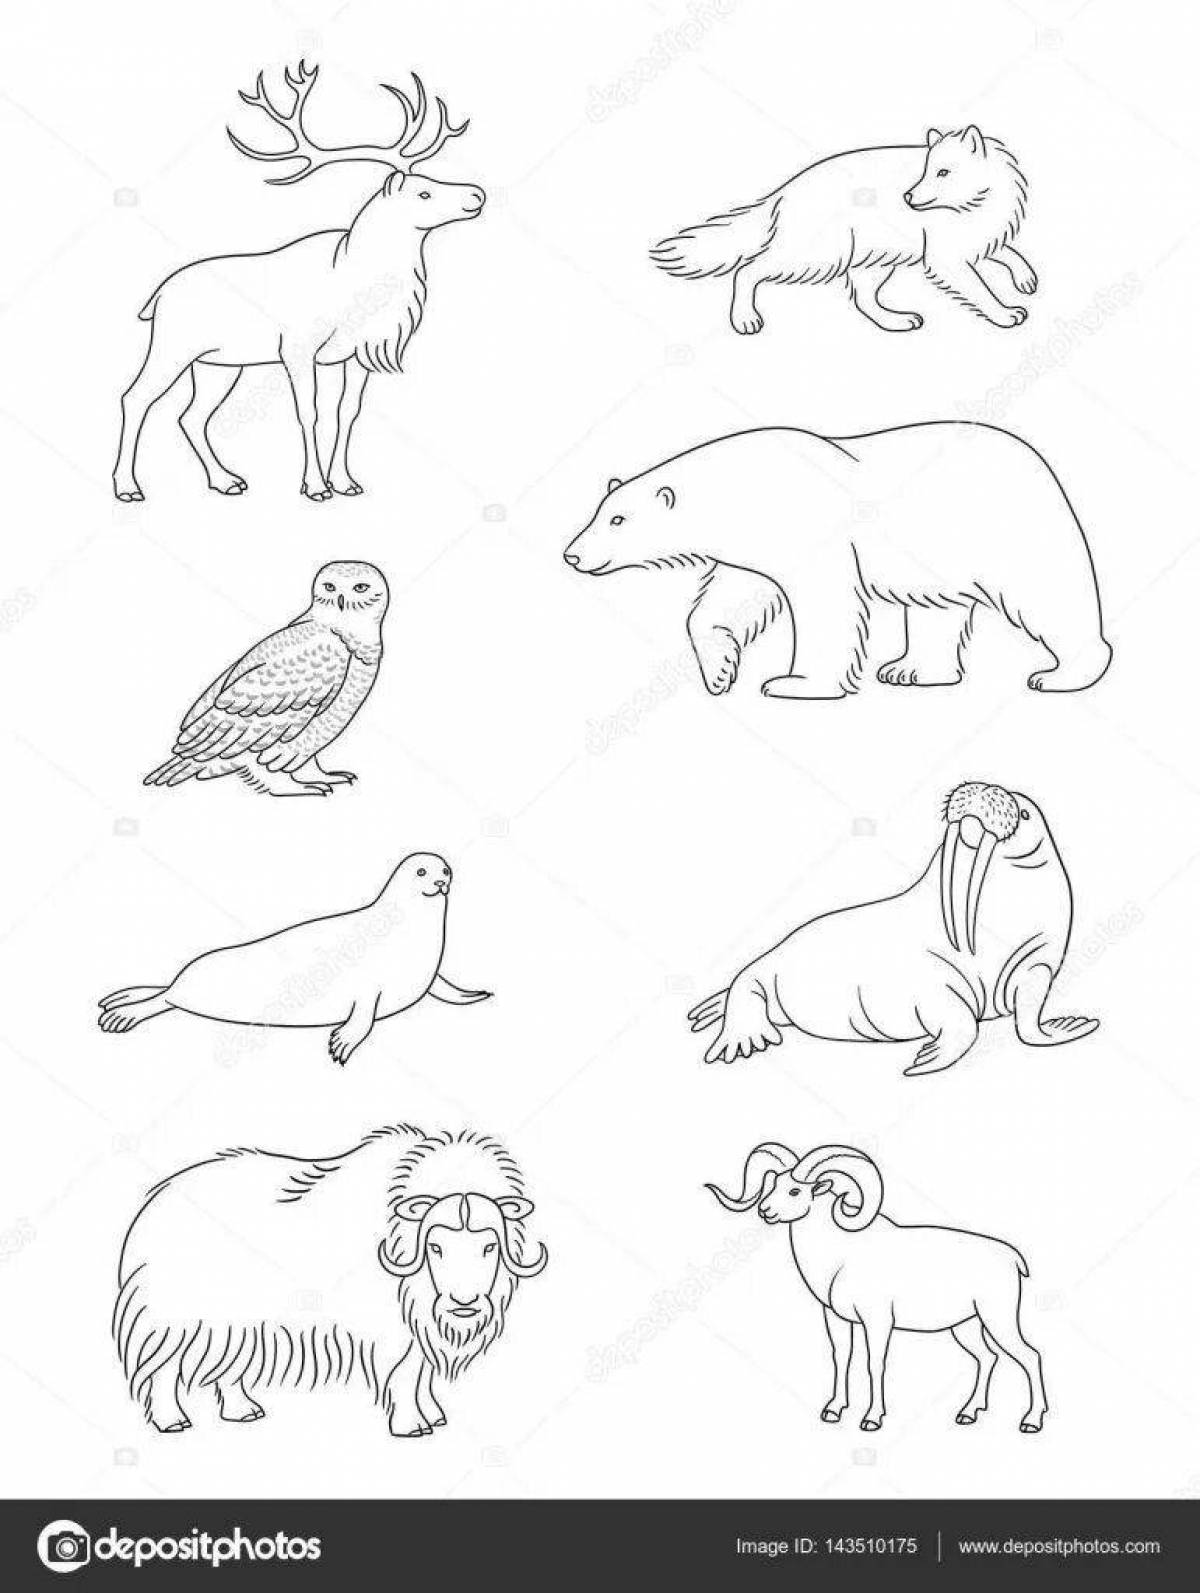 Funny Scandinavian animals coloring book